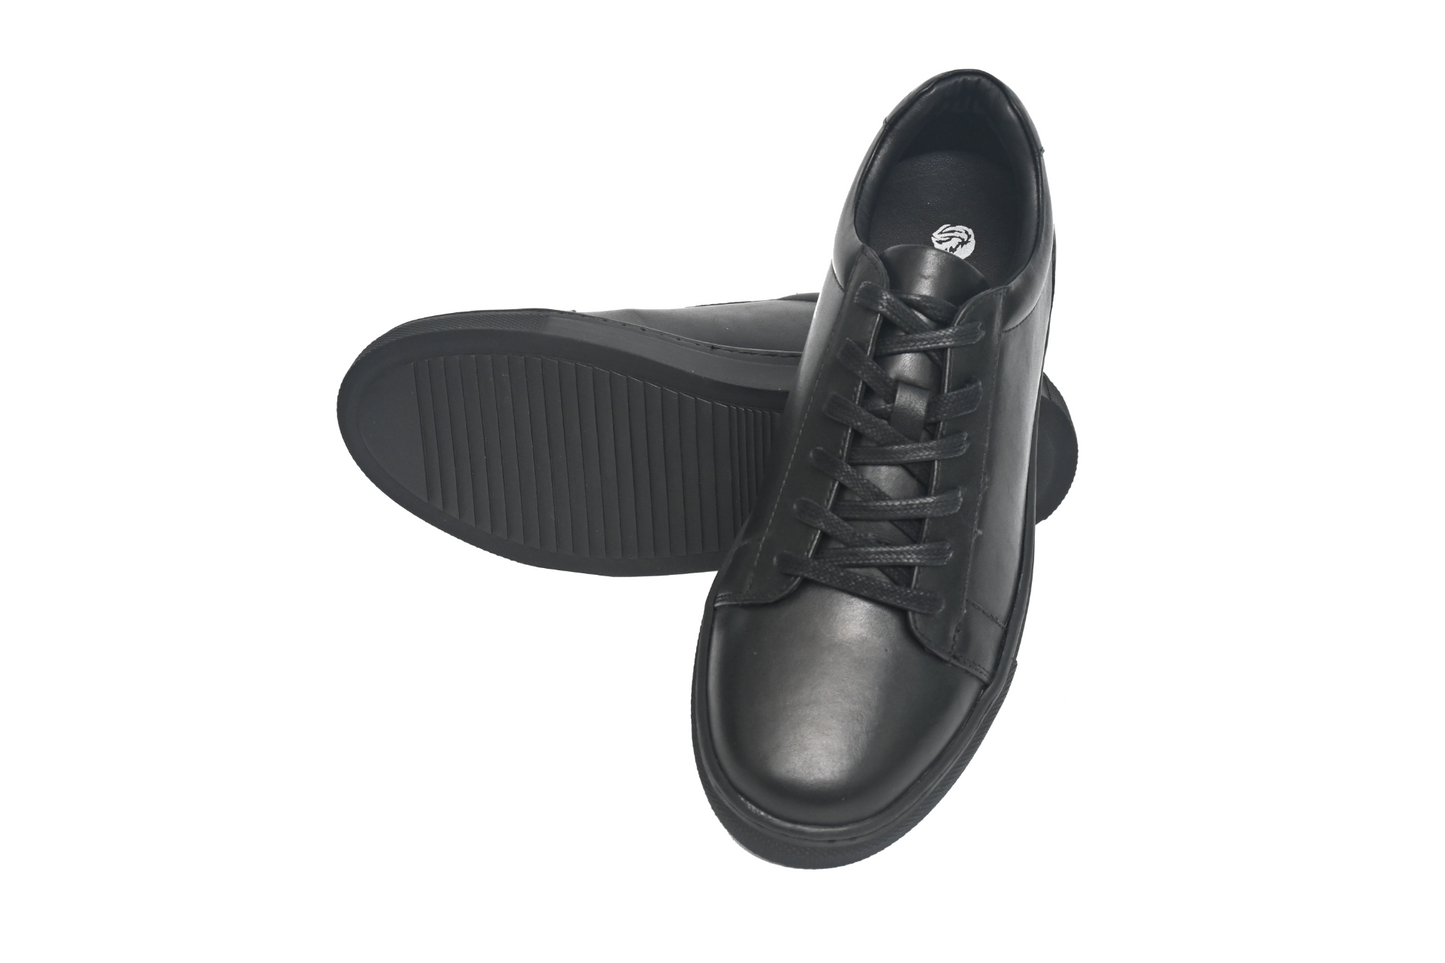 Men's Classic Black Shoes- Sneakers